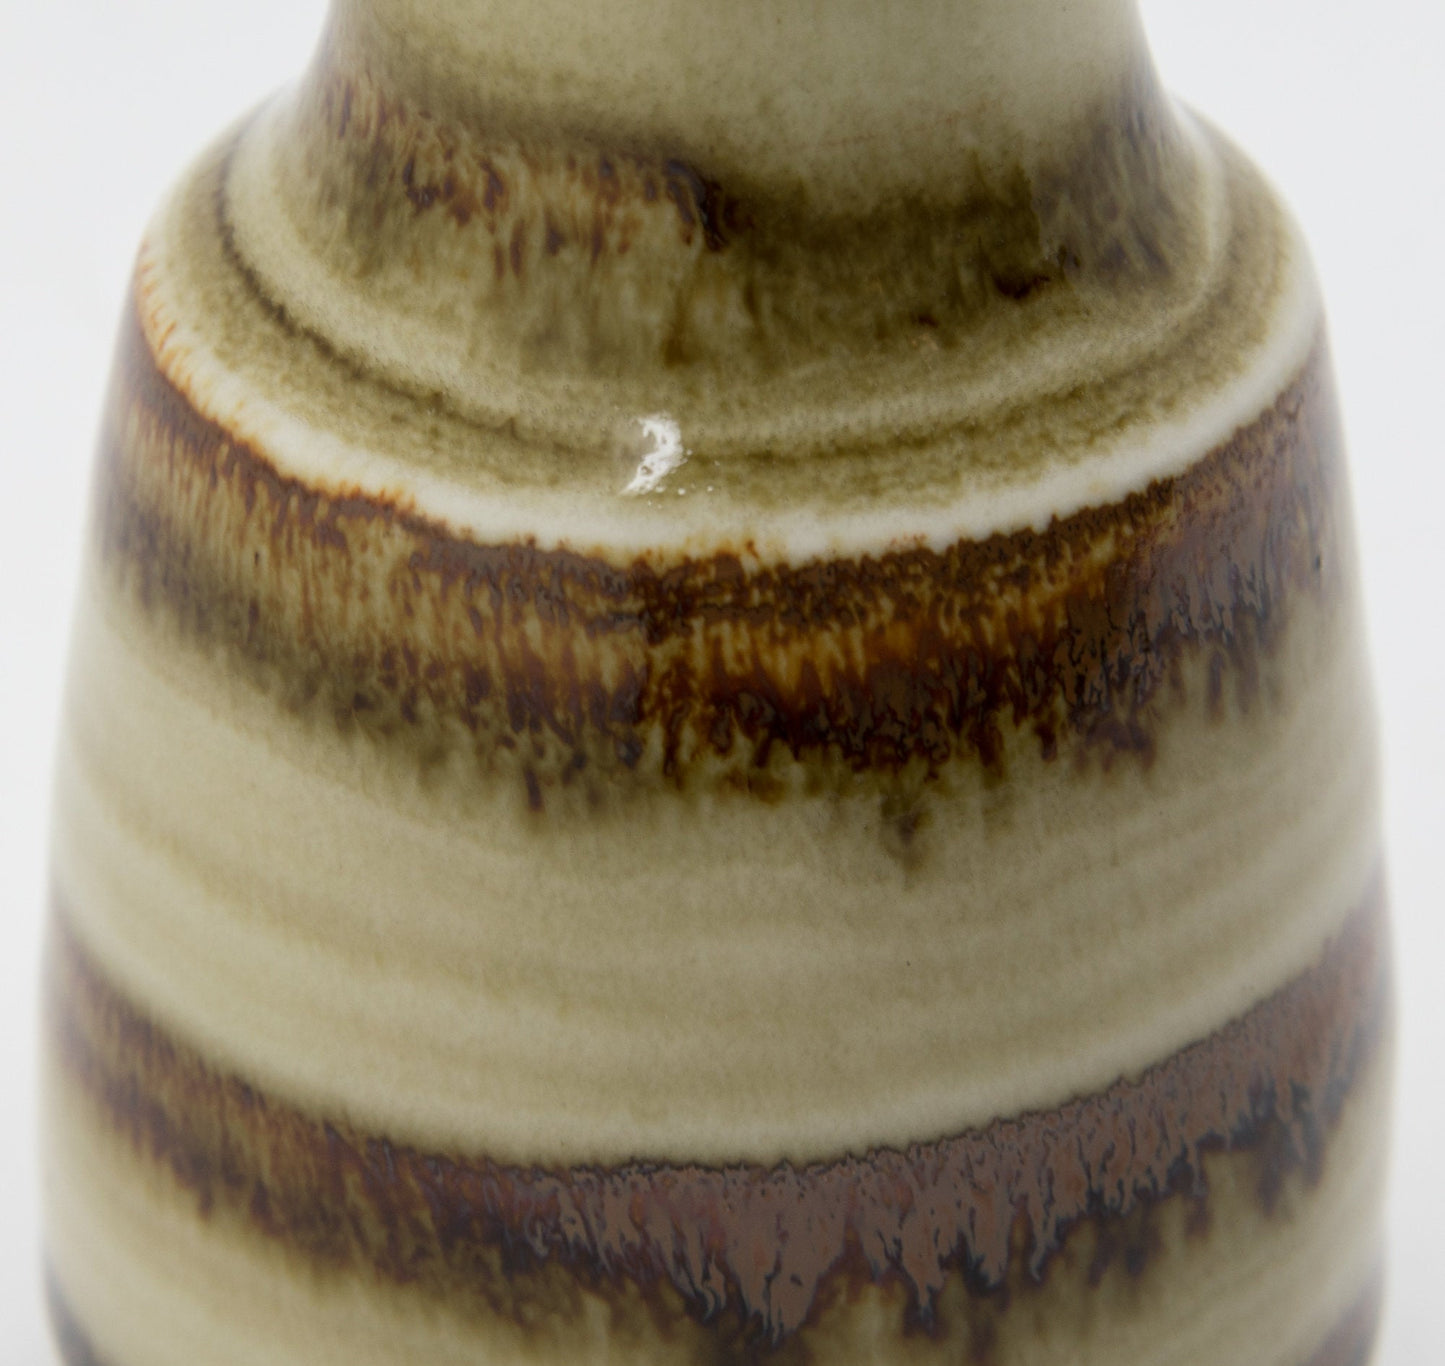 GUNNAR BORG Höganäs Brown and Beige Glazed Miniature Stoneware Vase Mollaris.com 